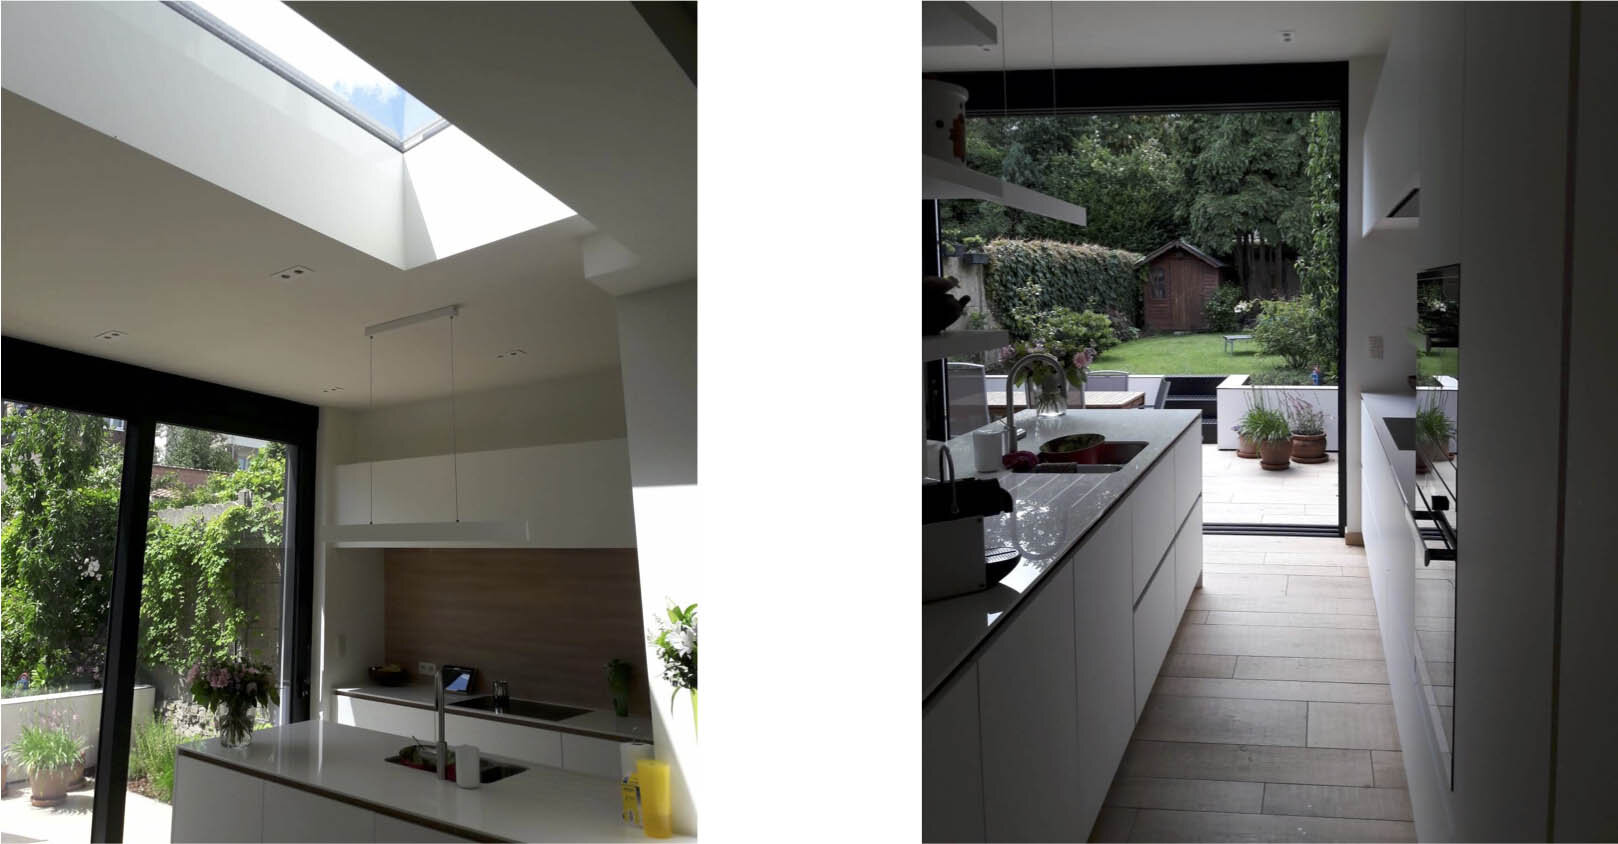 Dm17 - keuken + lichtkoepel.jpg